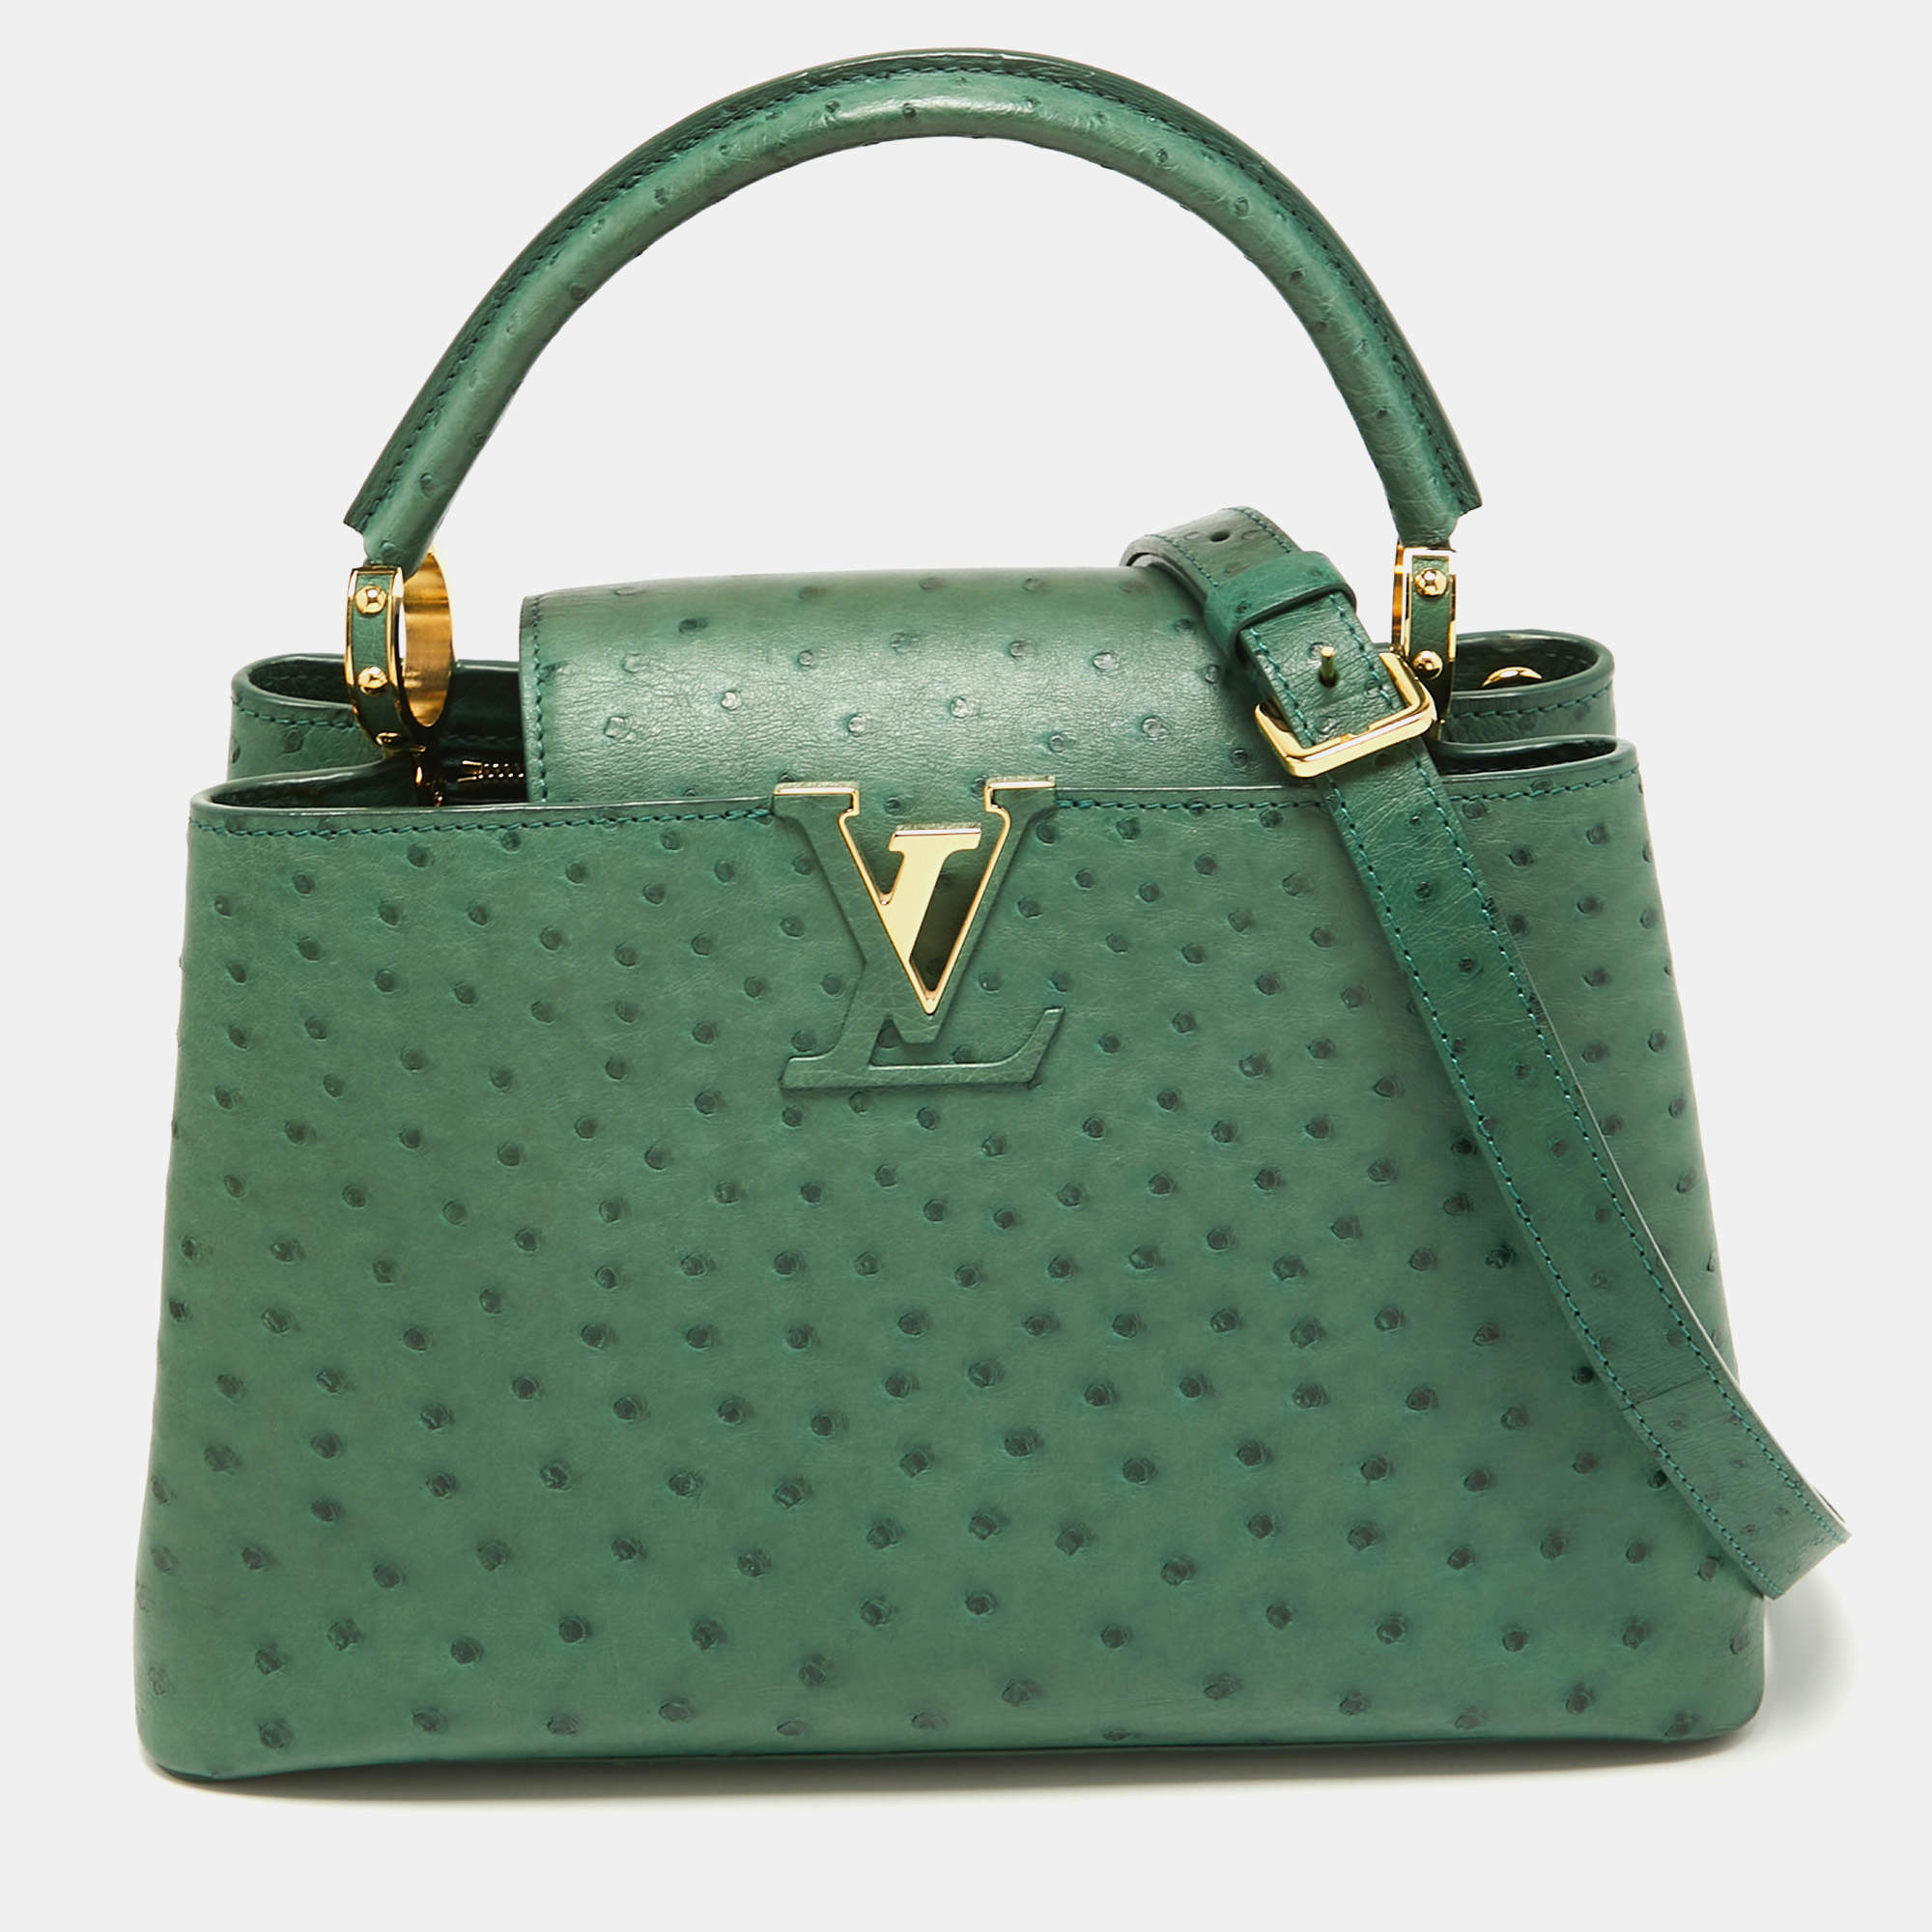 Louis Vuitton Capucines PM Black Ostrich Leather Crossbody Handbag